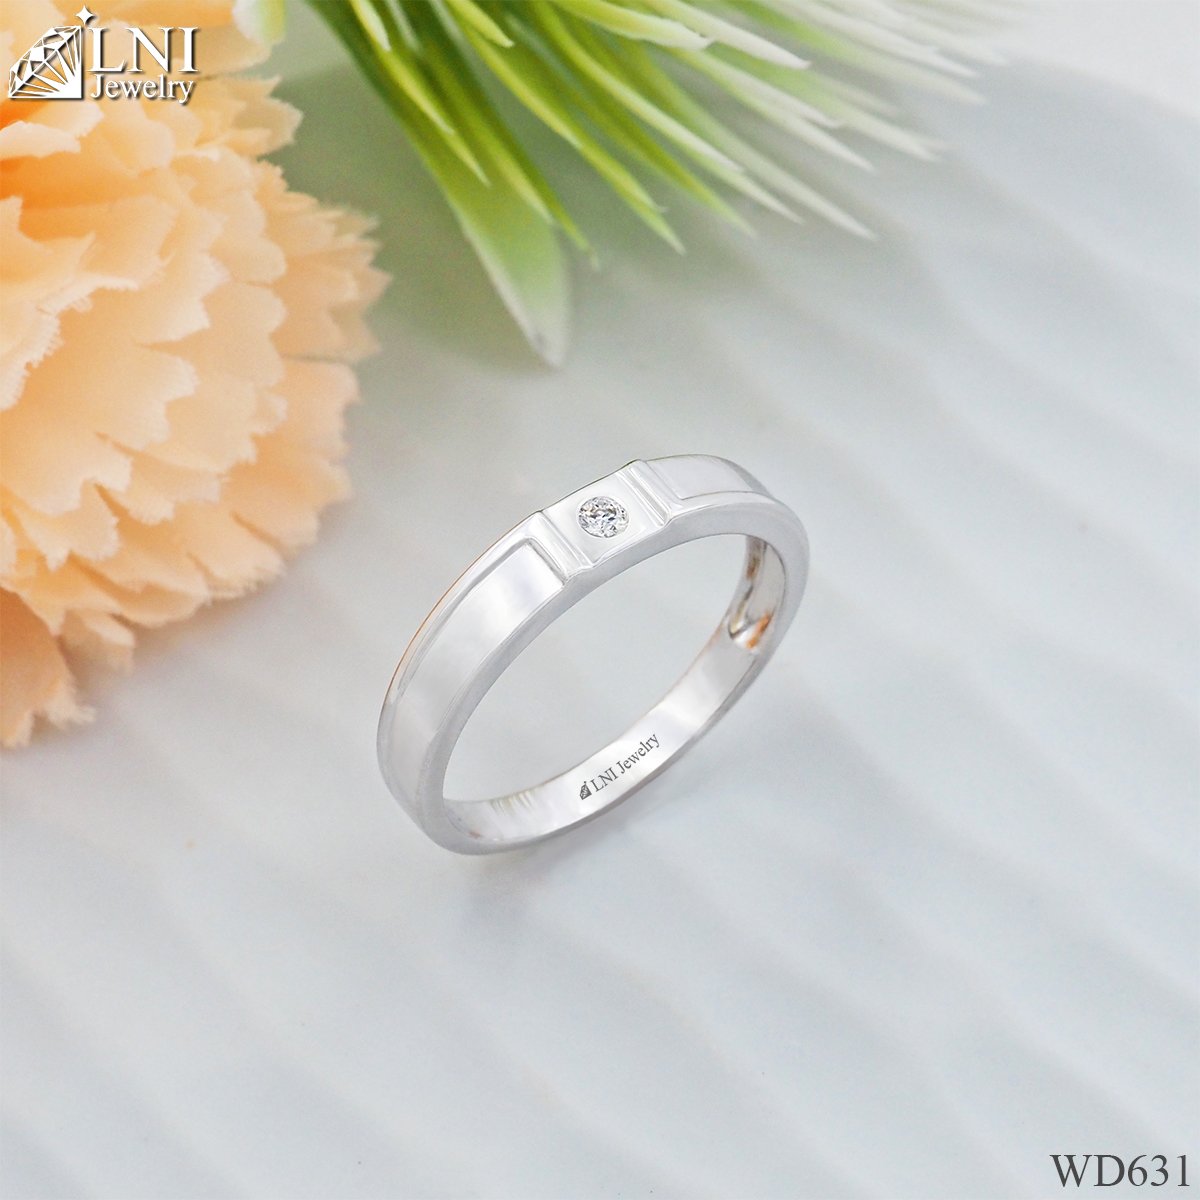 WD631 Single Diamond Ring